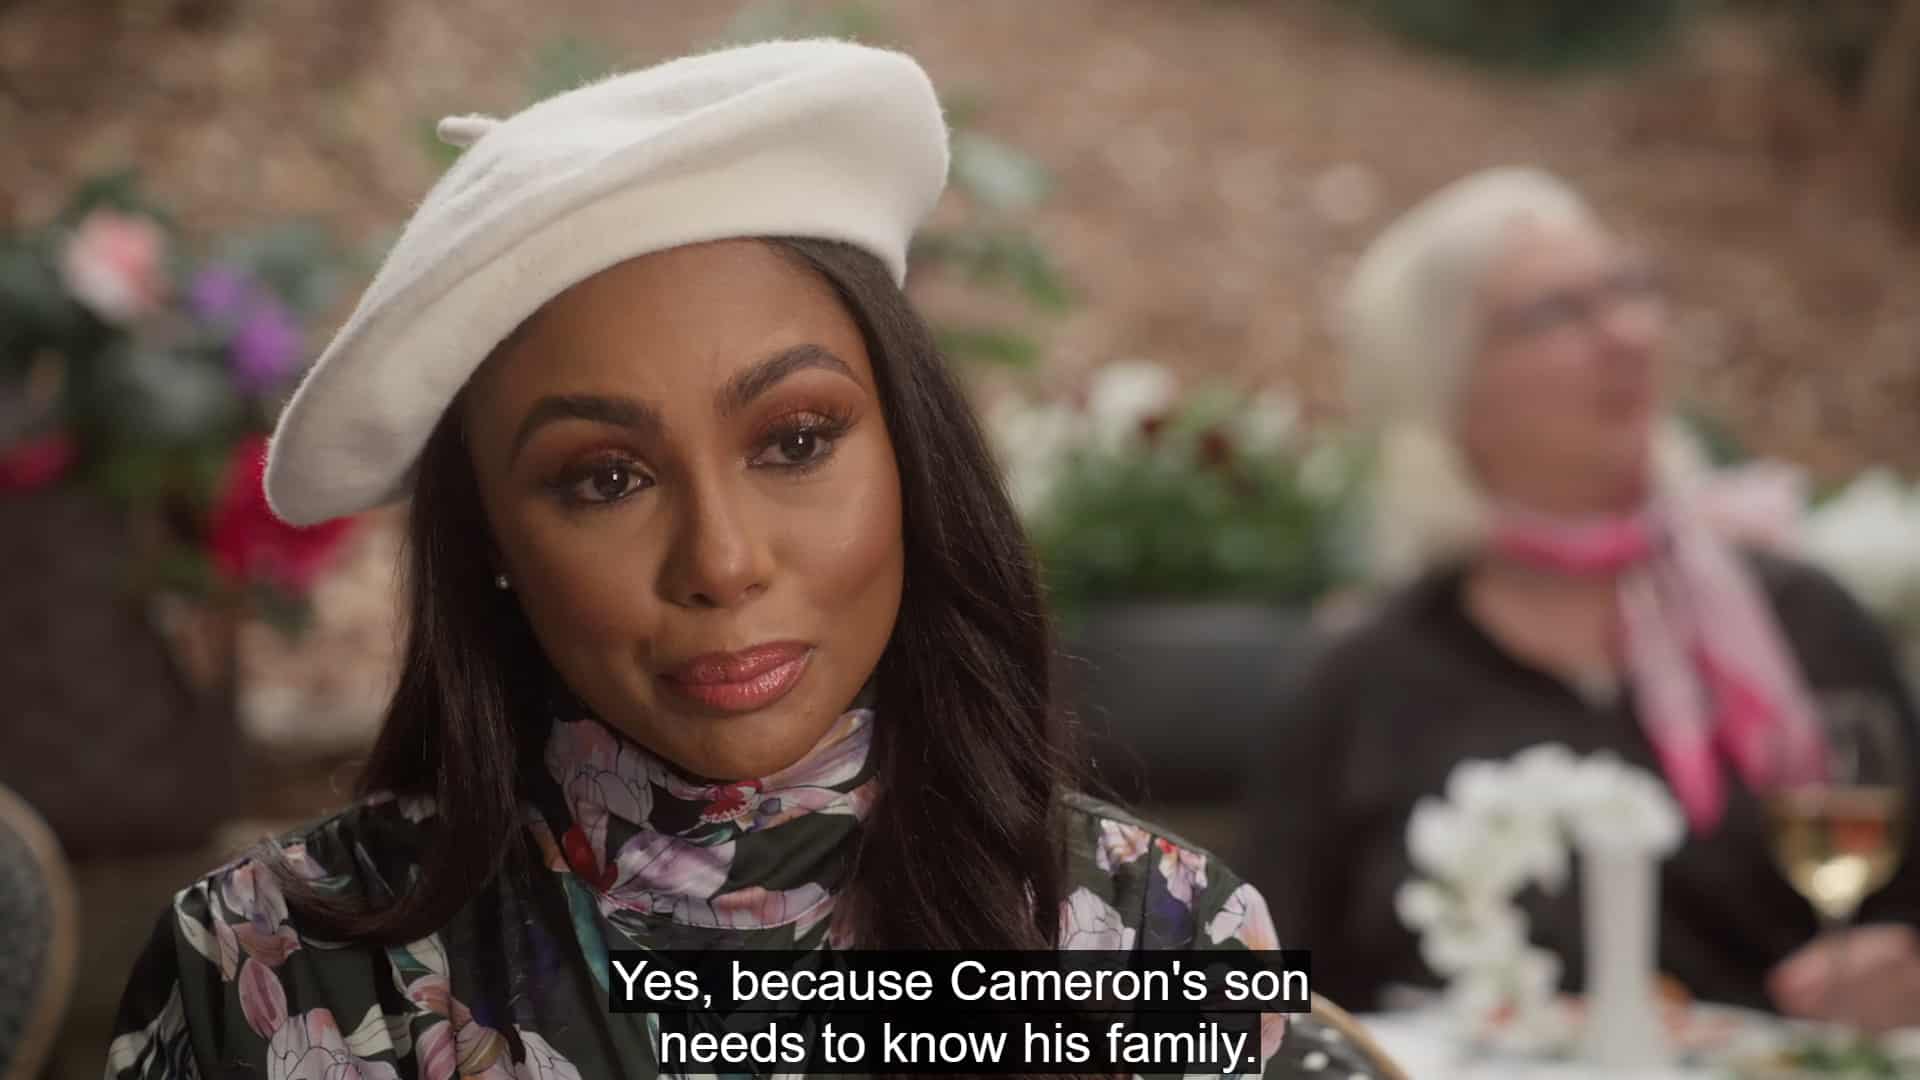 Laurel (Joyce Glenn) revealing she has a son with Cameron